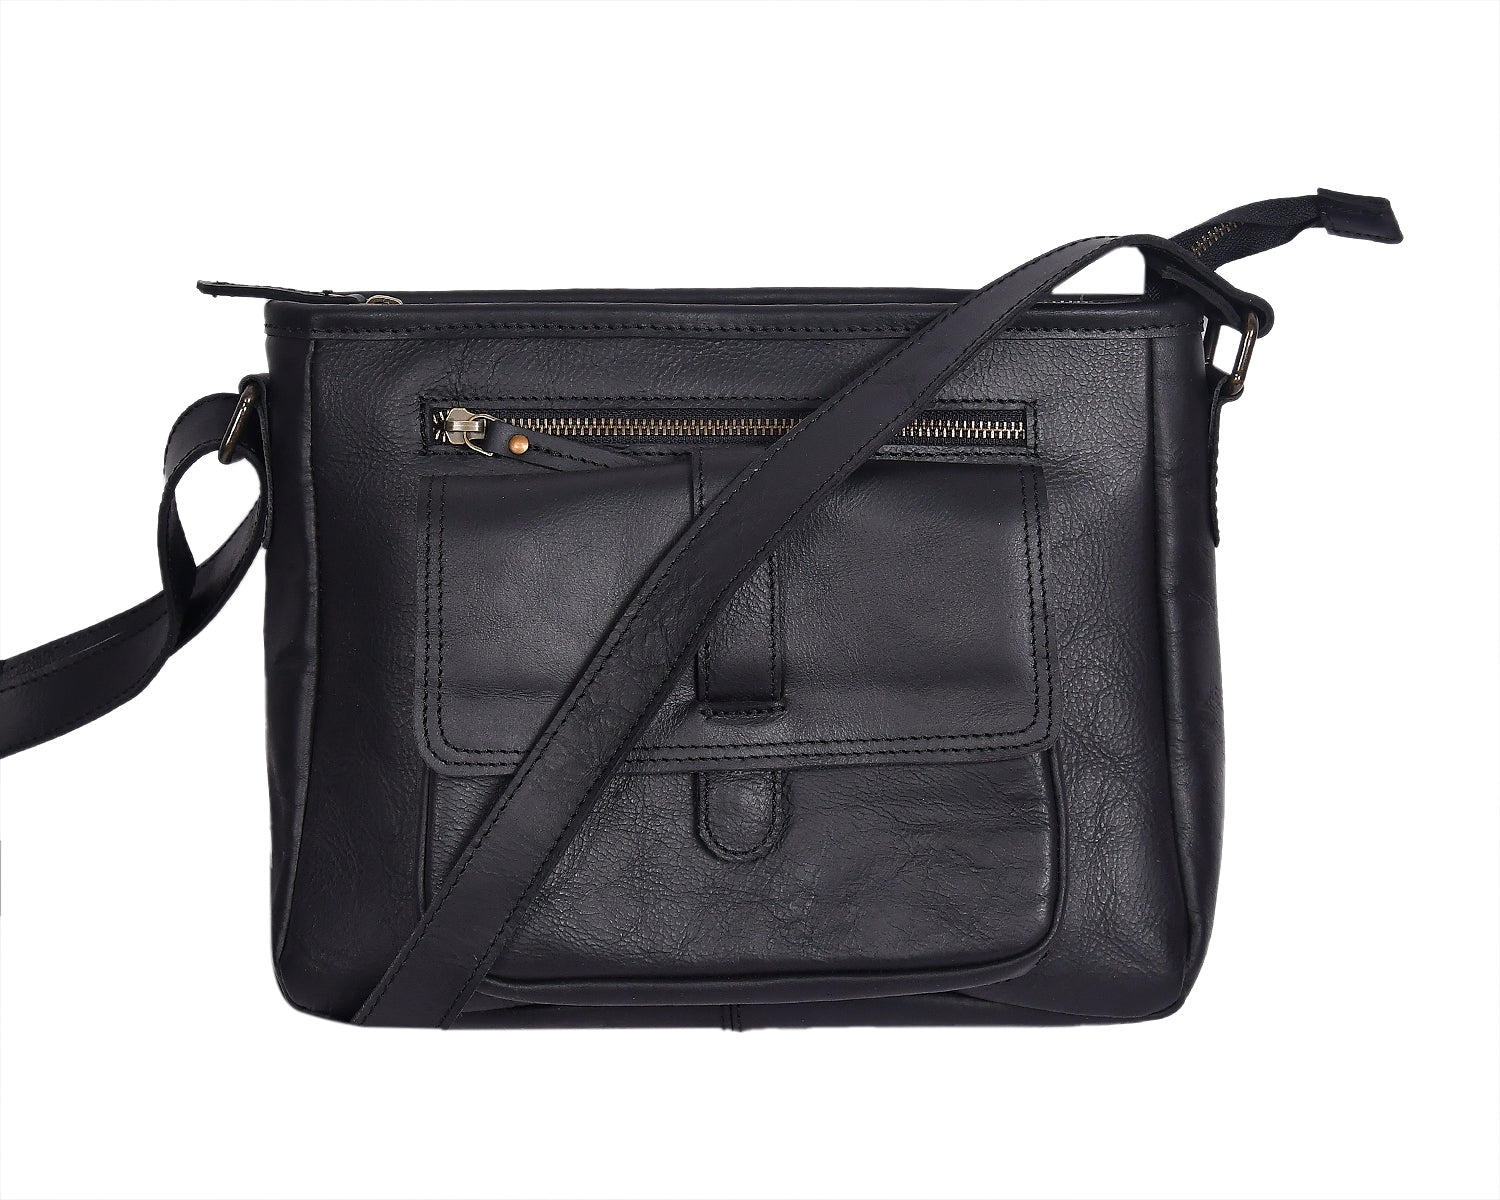 Elegance Redefined: Black Leather Sling Bag - Your Perfect Fashion Companion. - CELTICINDIA